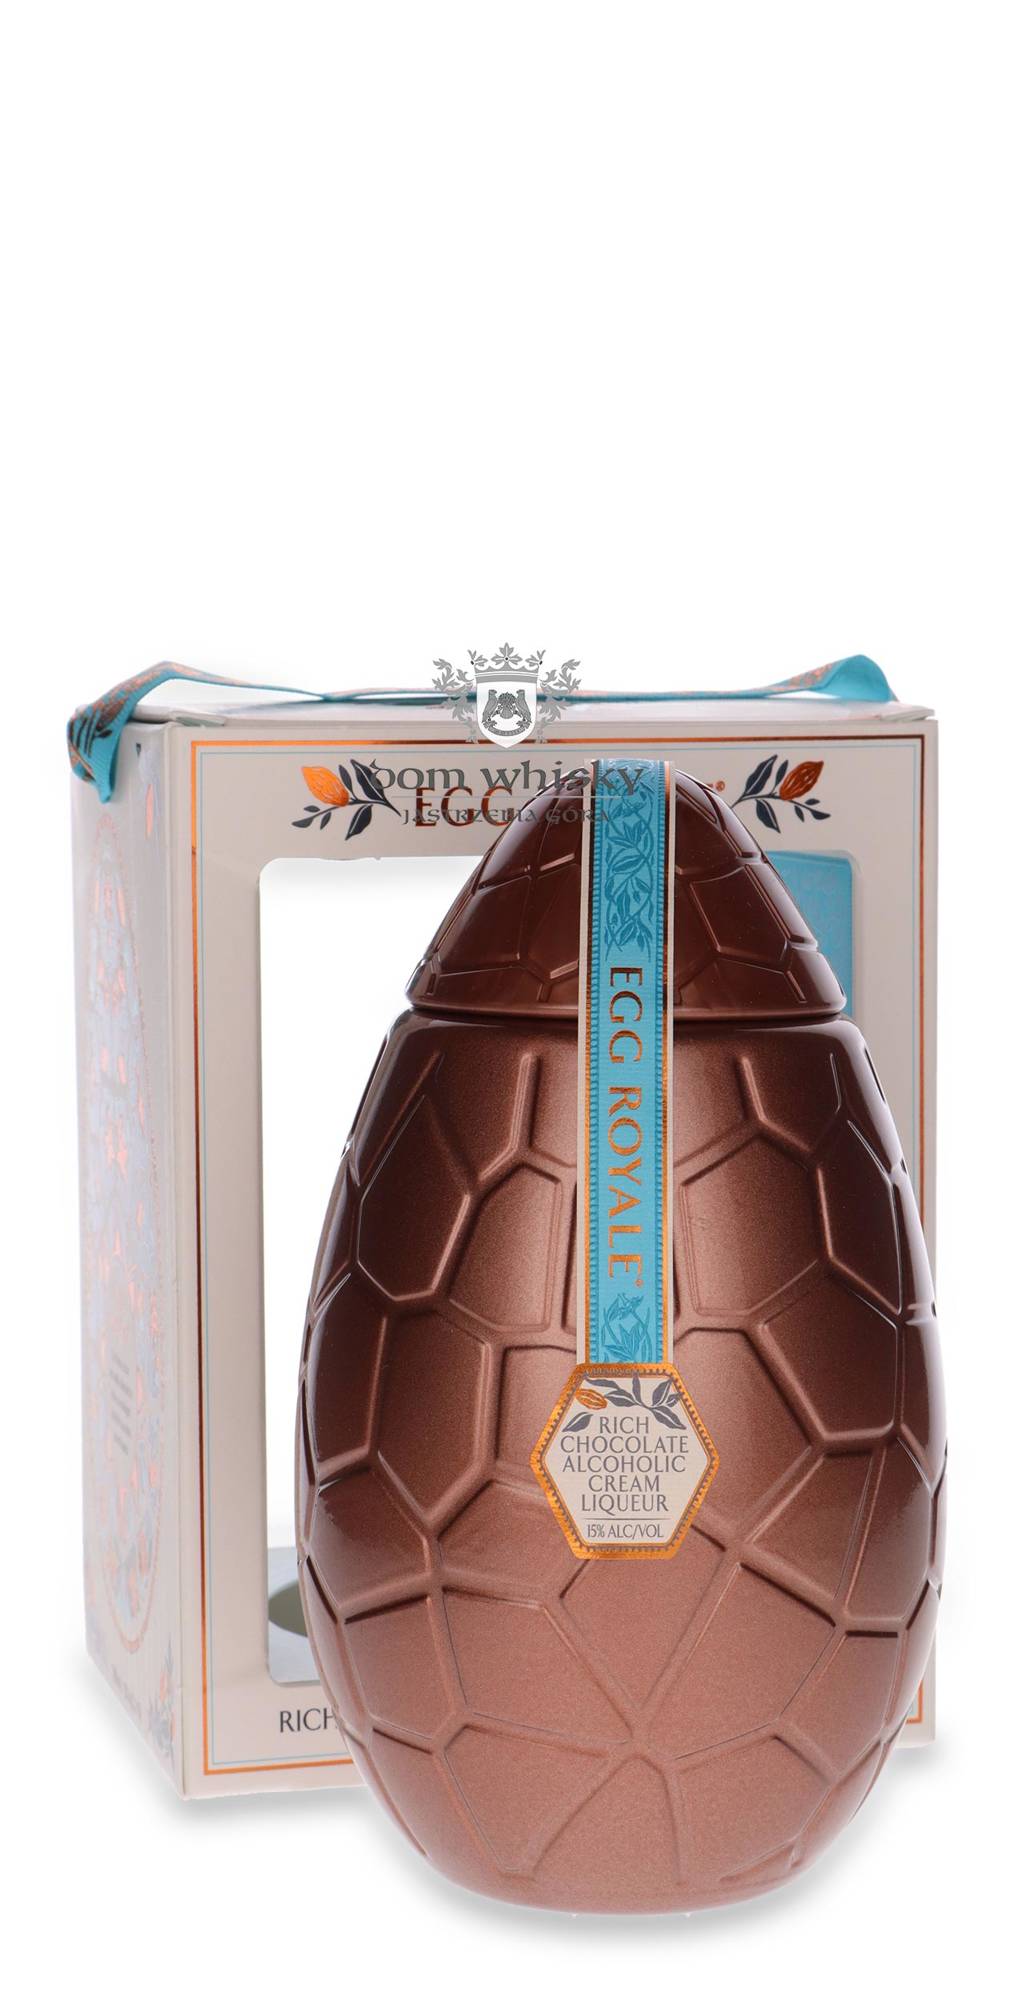 Egg Royale Chocolate | / / Liqueur Dom Cream Whisky 0,7l 15